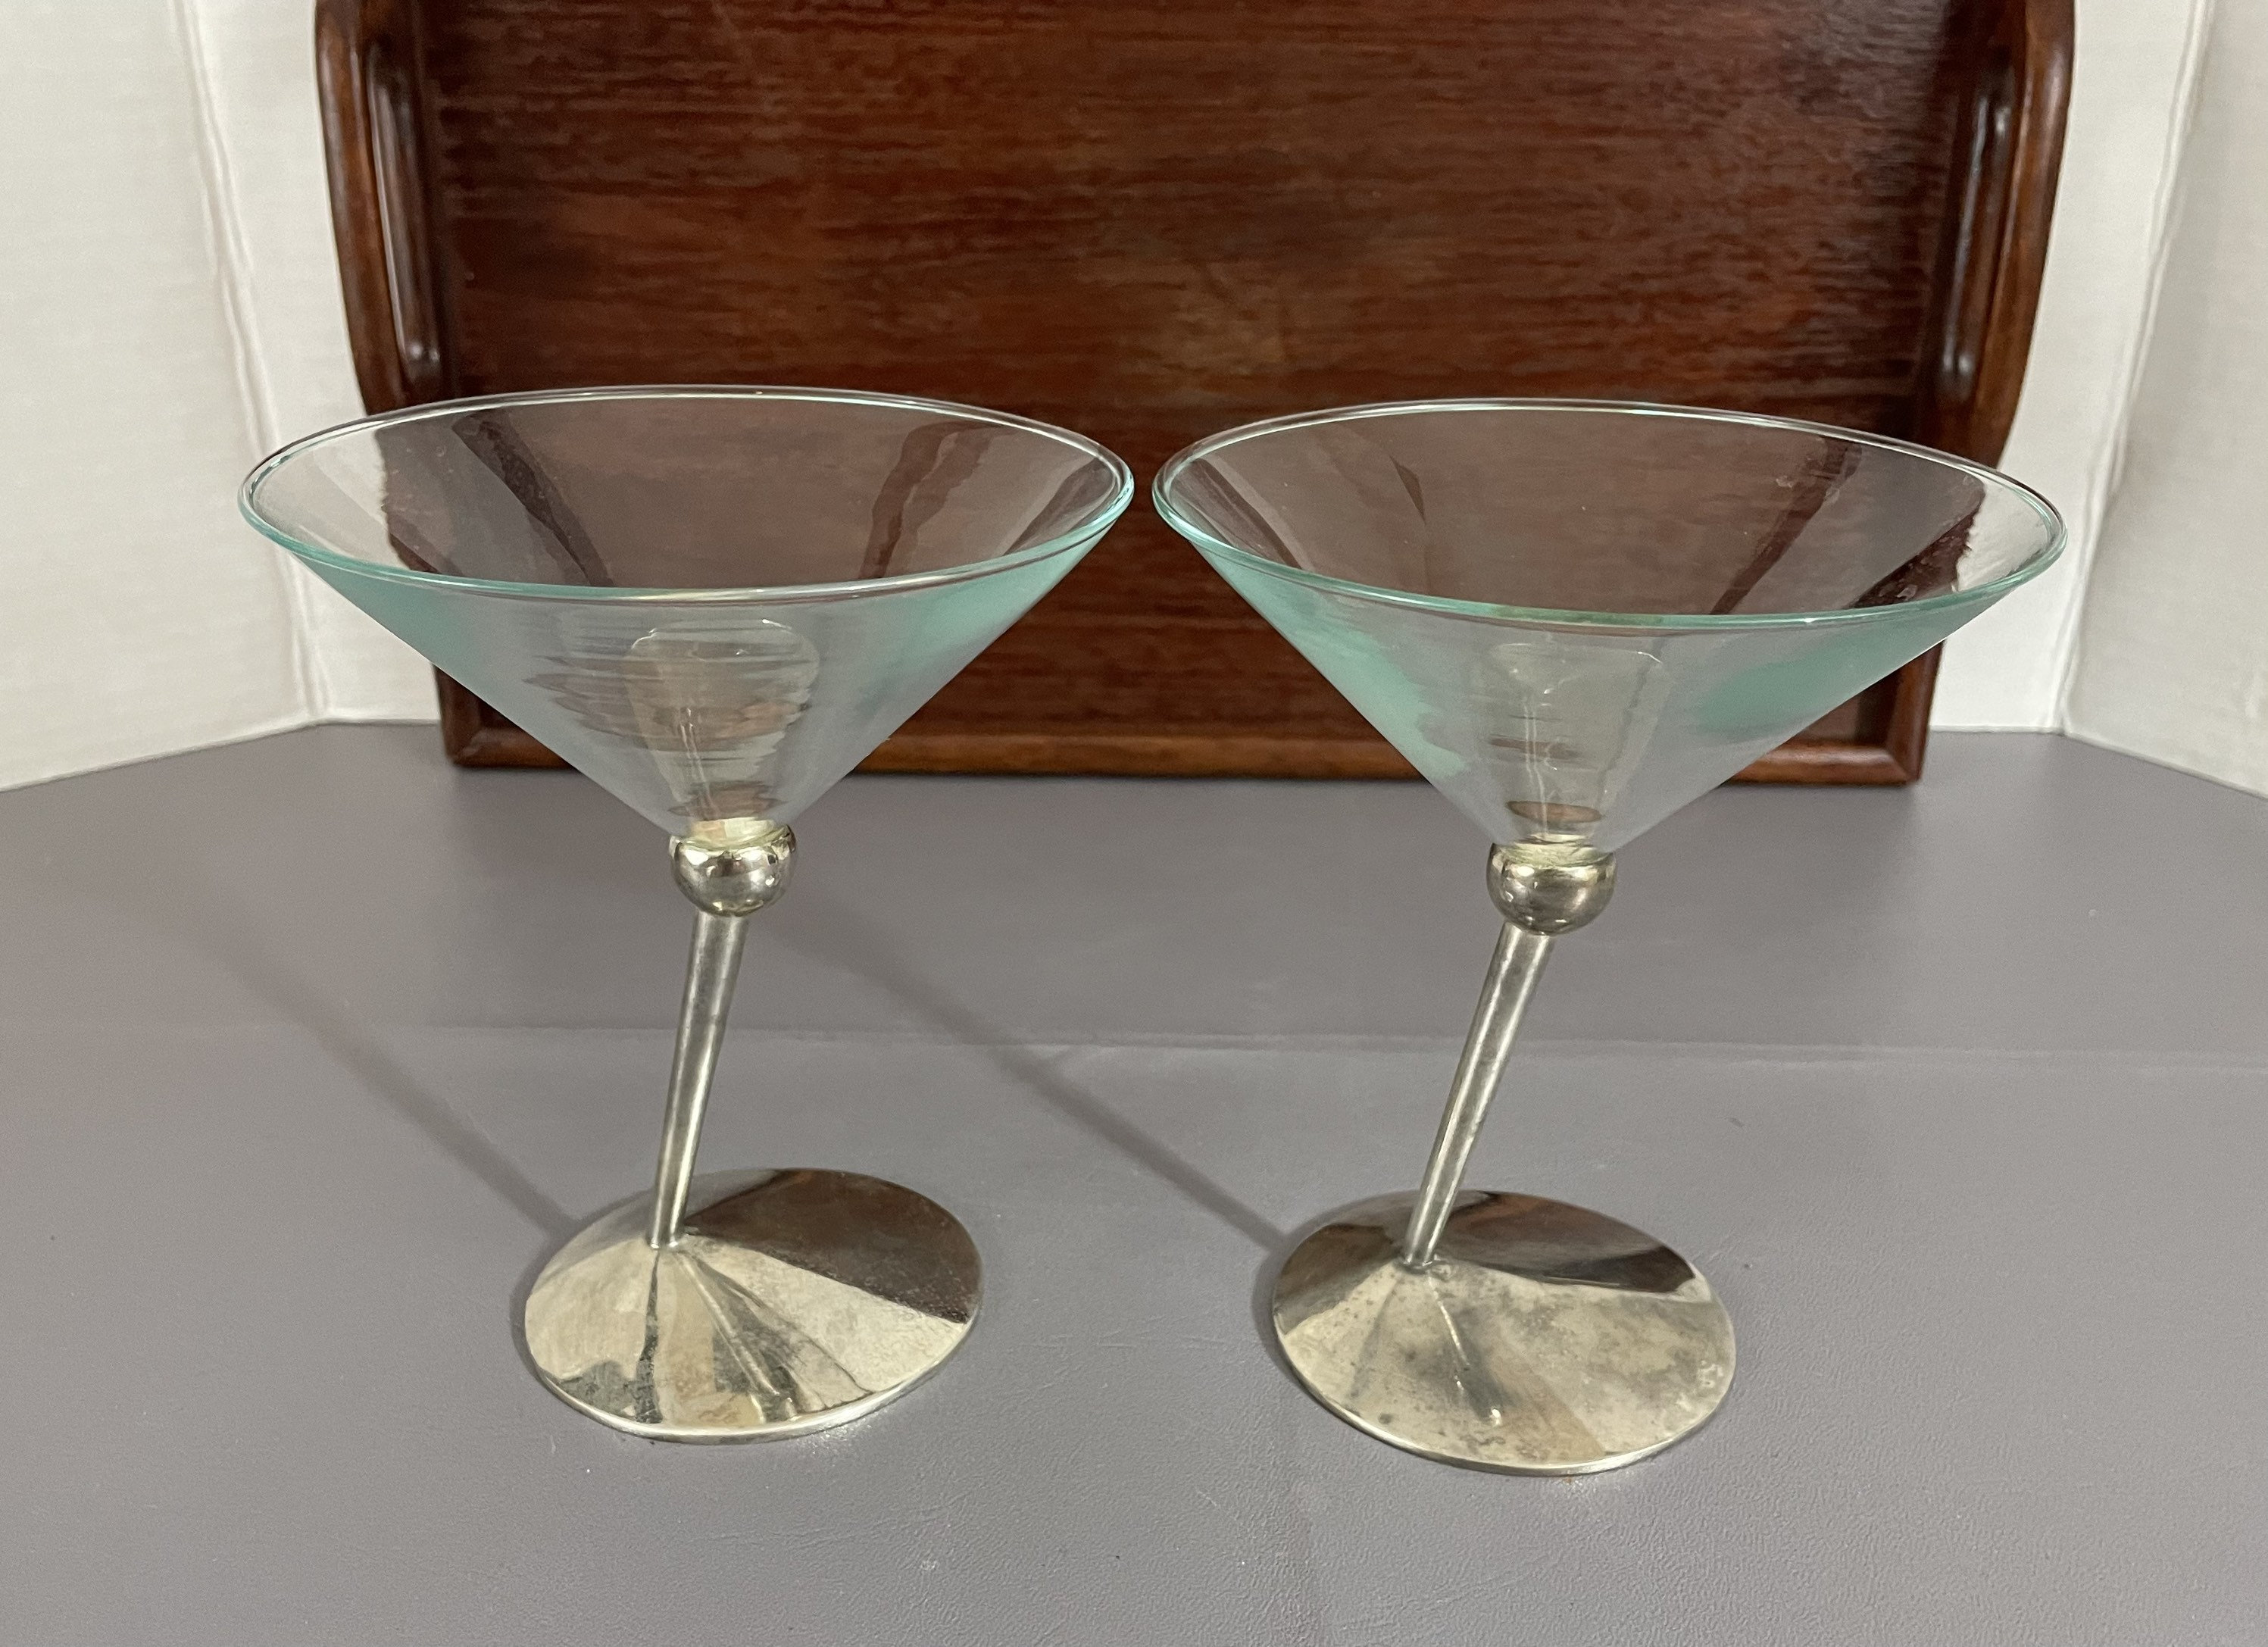 Bijan Short Martini Glass